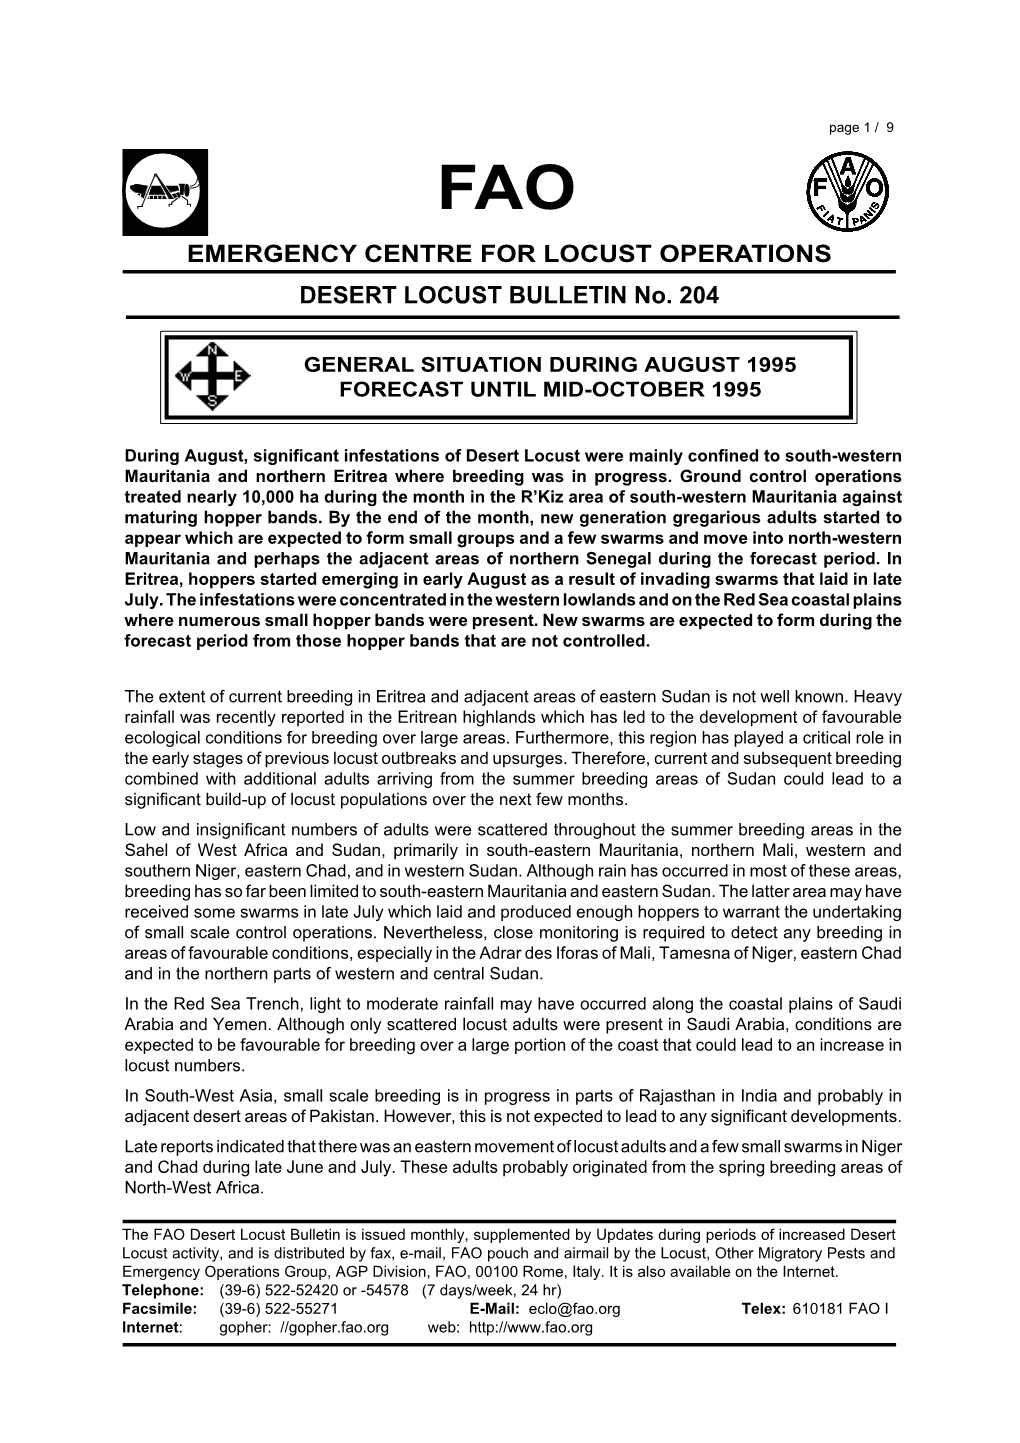 FAO Desert Locust Bulletin 204 (English)